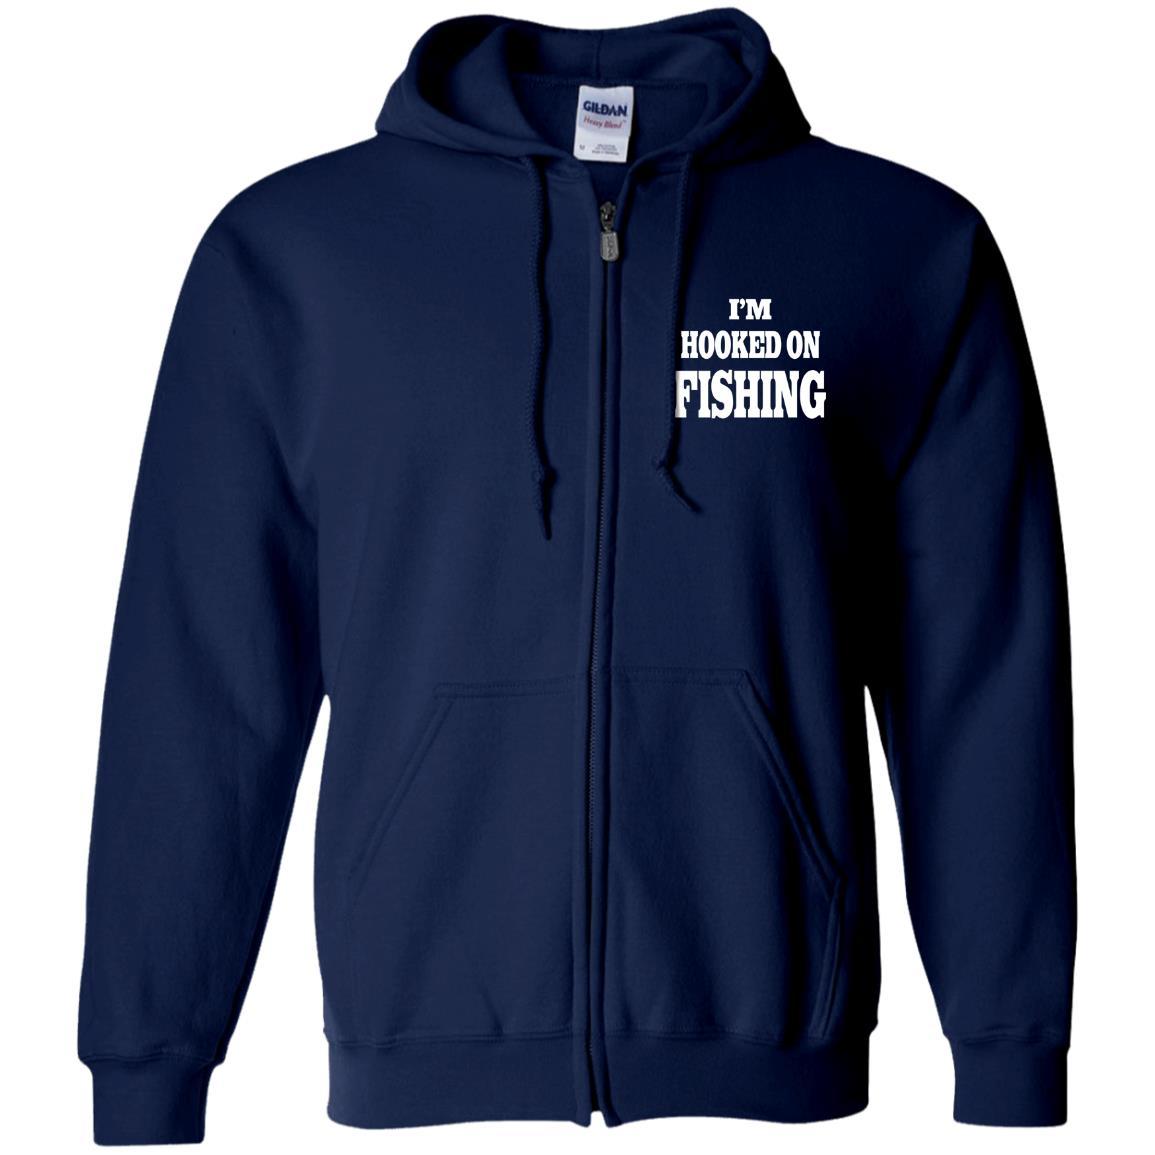 I'm hooked on fishing zip-up hoodie navy